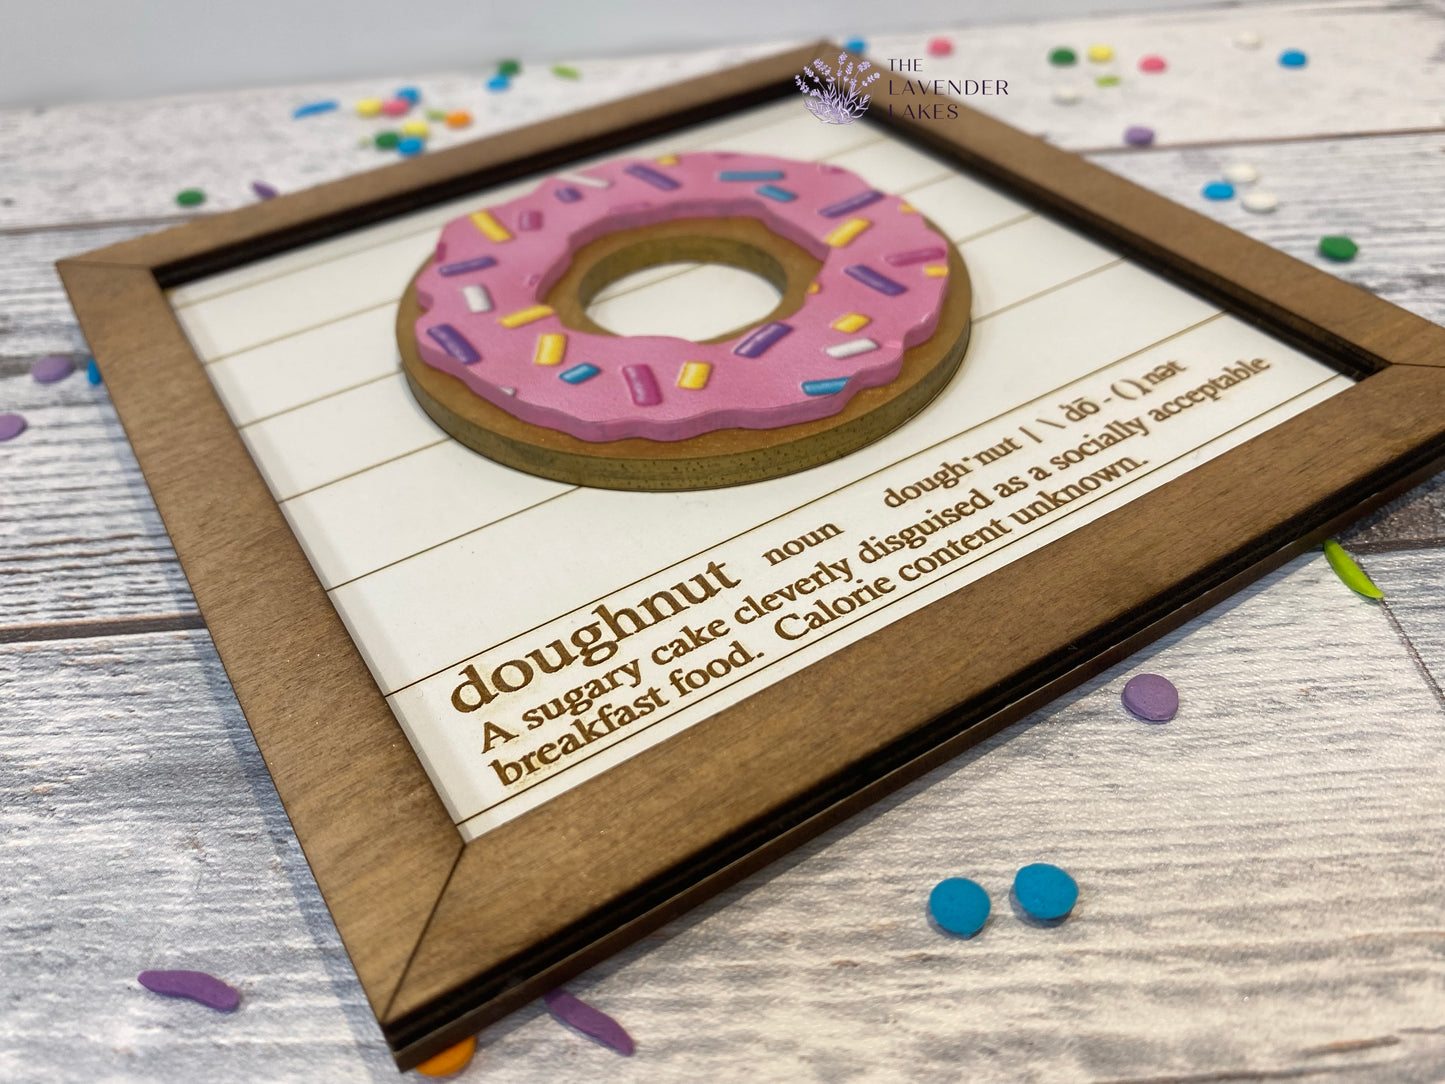 Doughnut Mini Sign